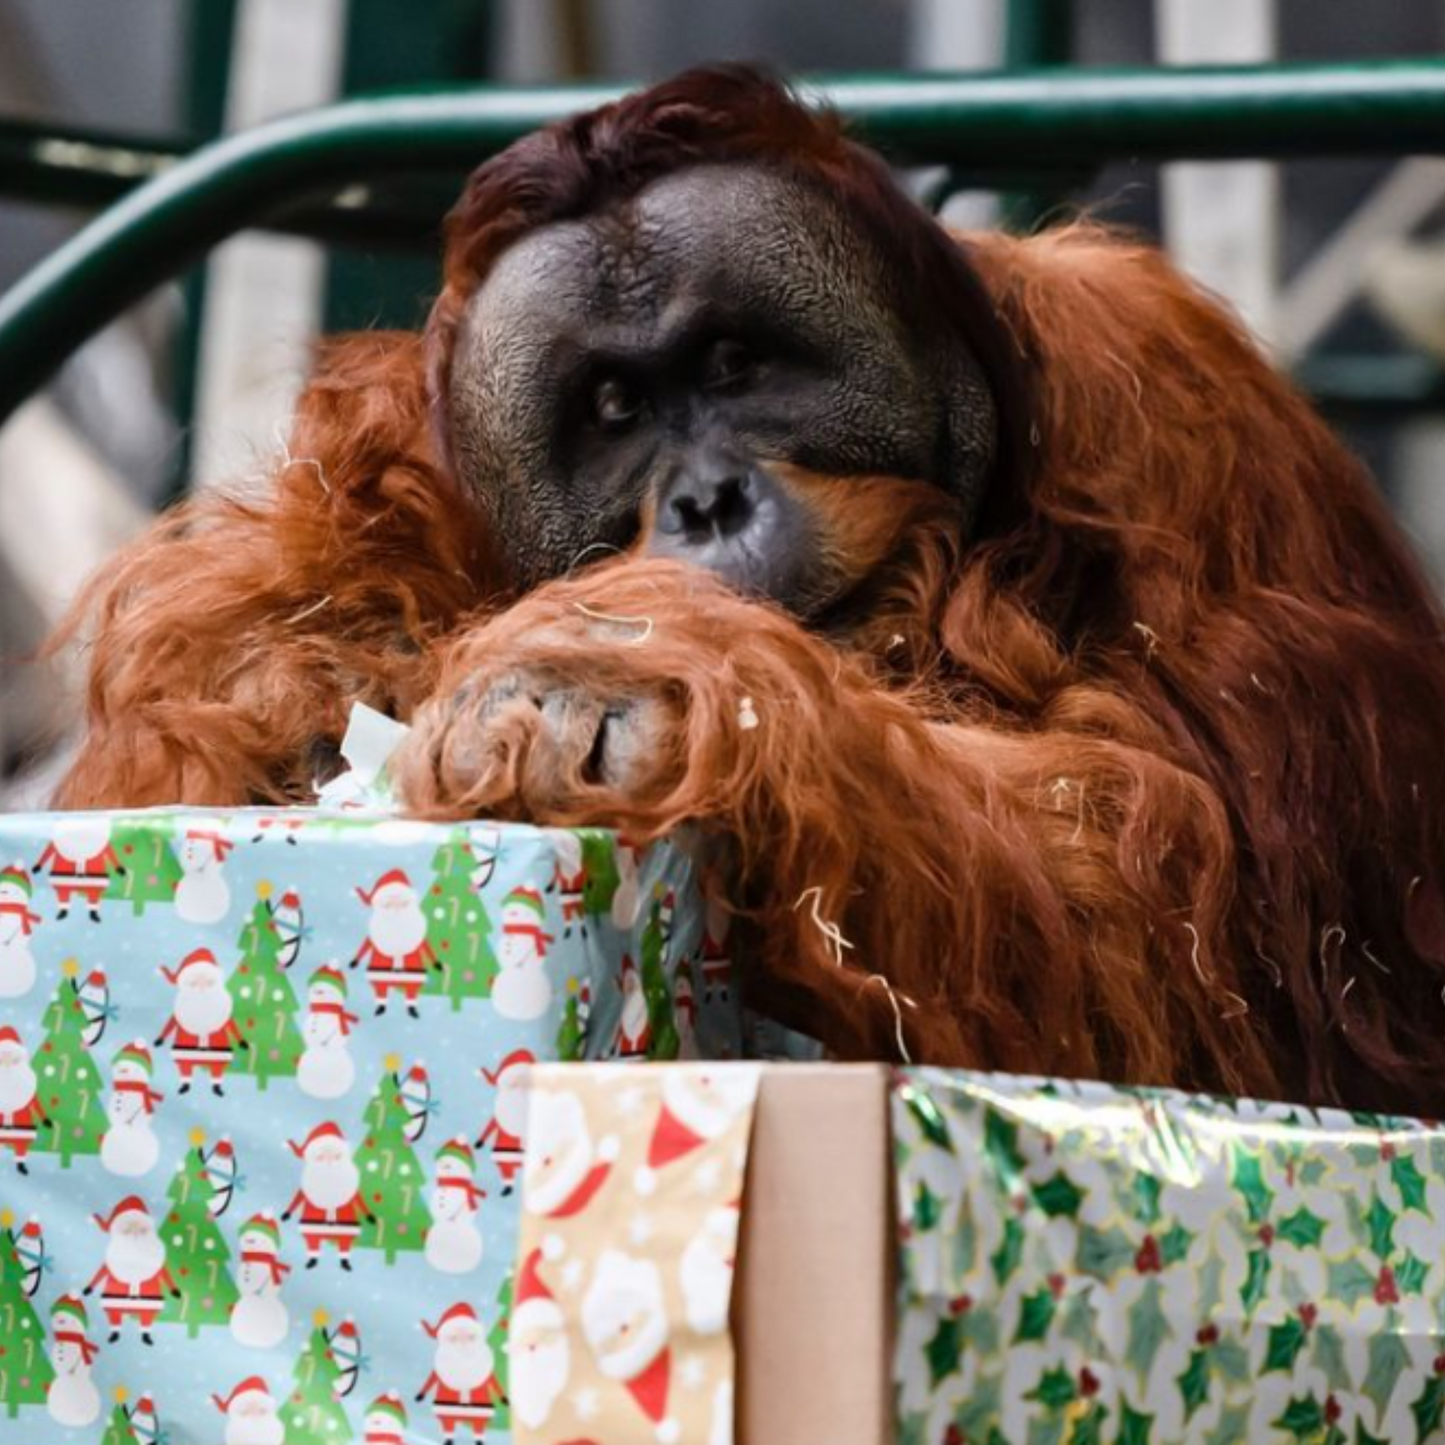 Box of Chalk for Orangutans